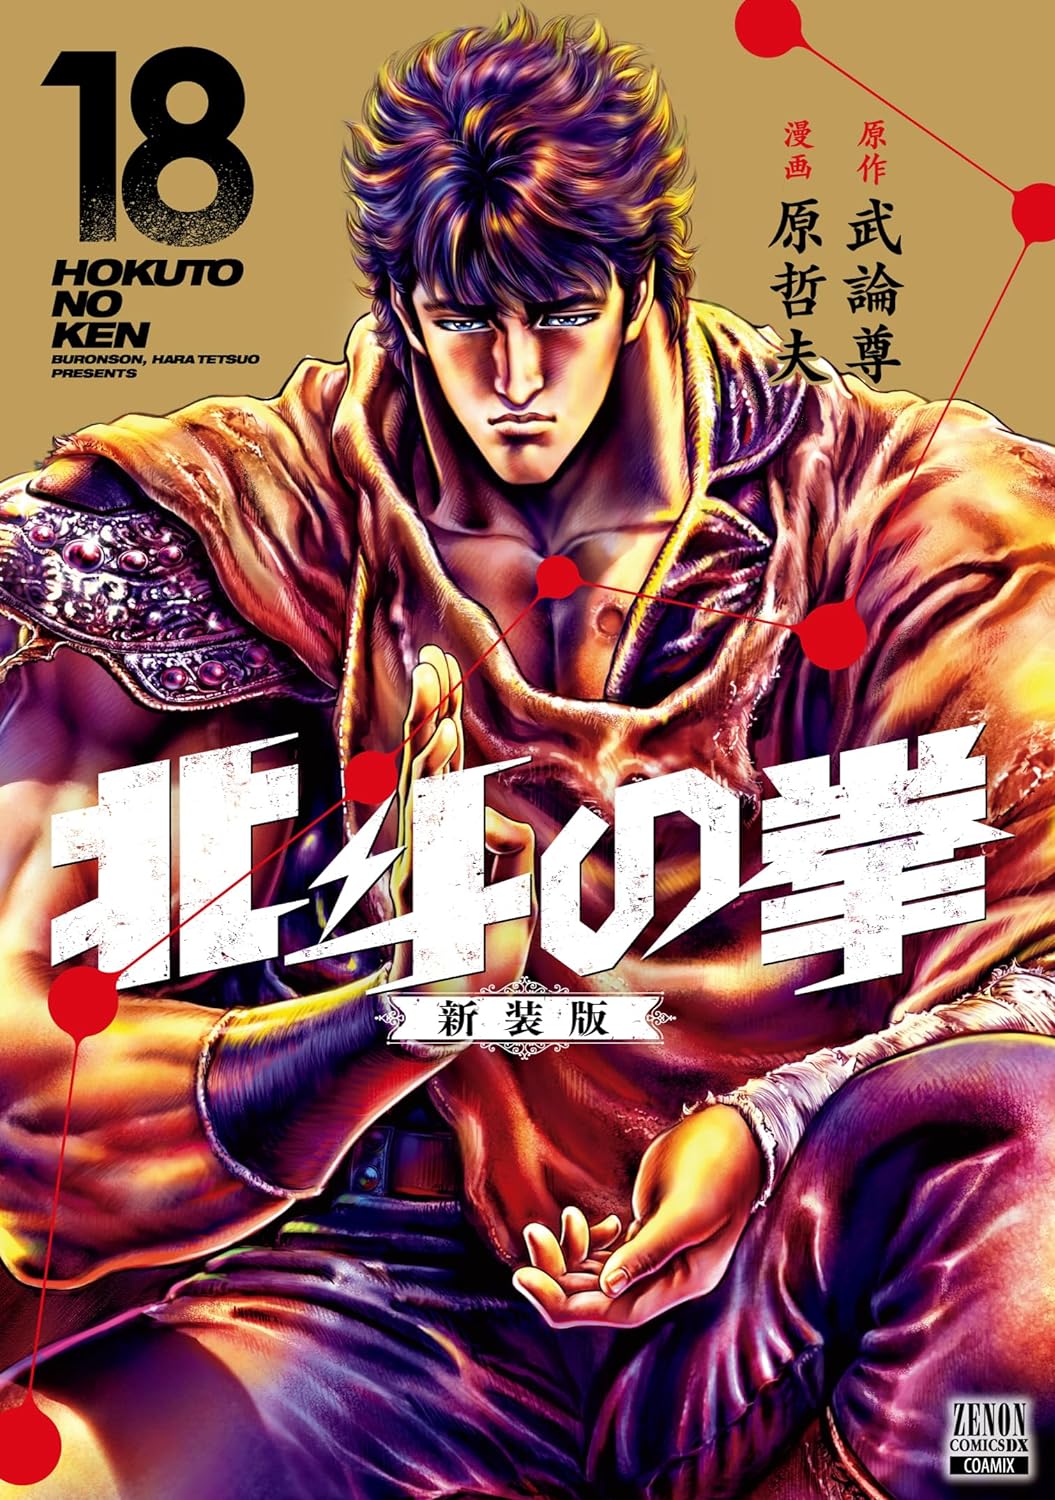 Hokuto no Ken (Fist of the North Star) #18  / Comic